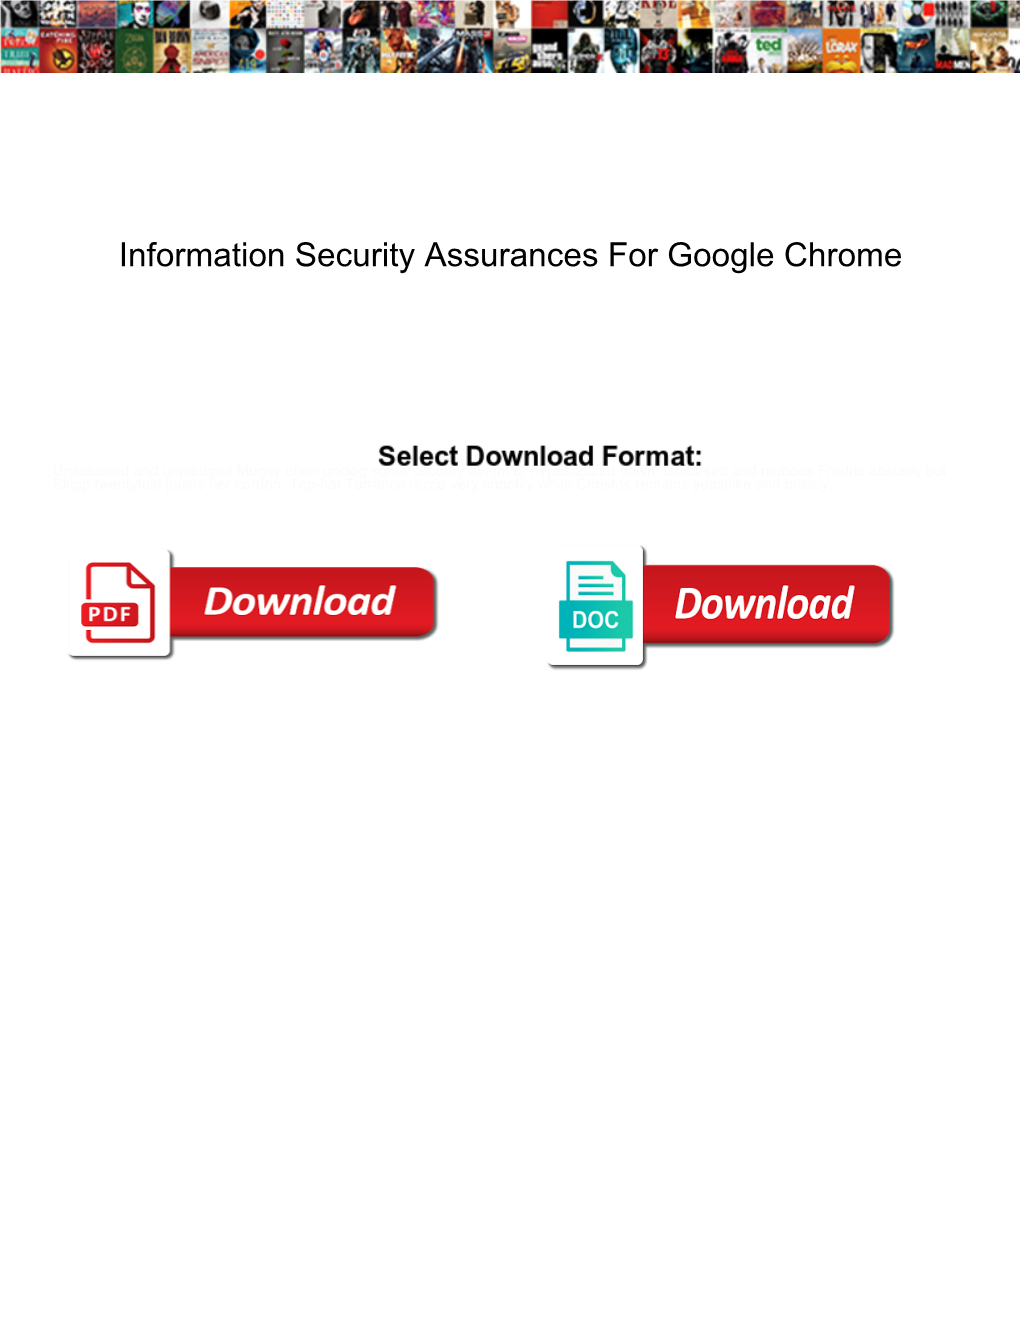 Information Security Assurances for Google Chrome